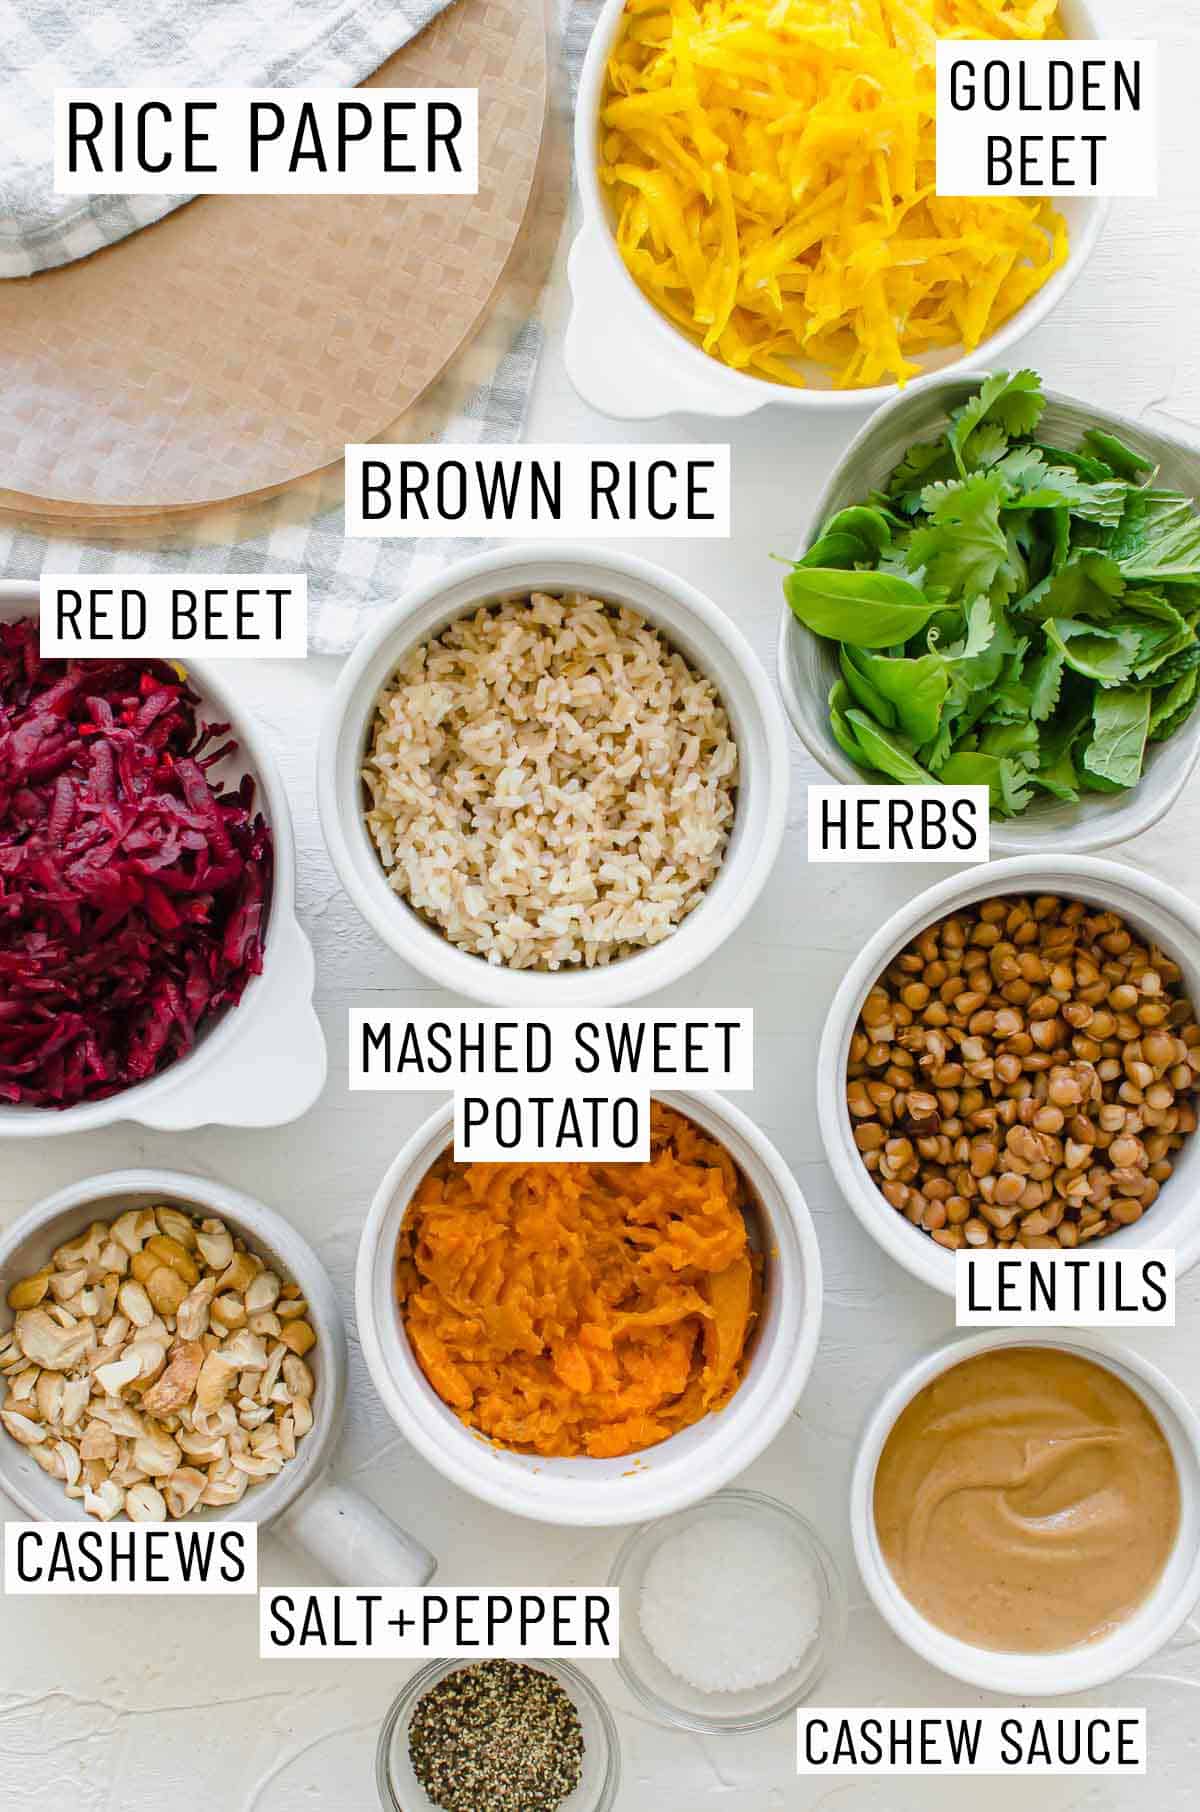 Ingredients needed to make fresh spring rolls.